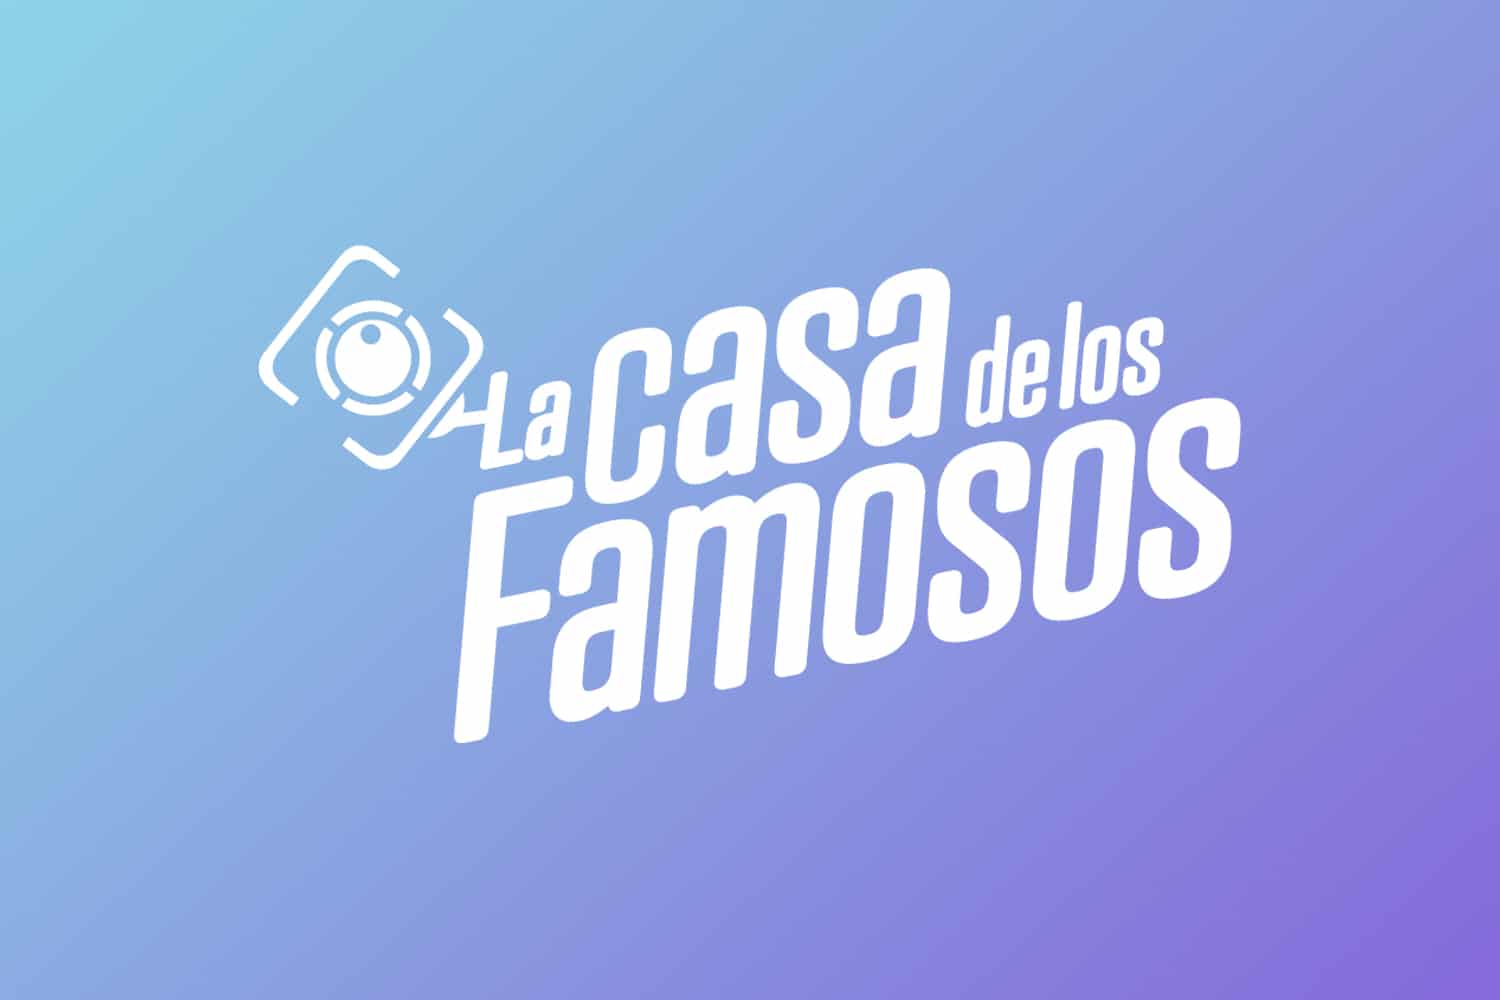 What You Need to Know About “La Casa de Los Famosos”